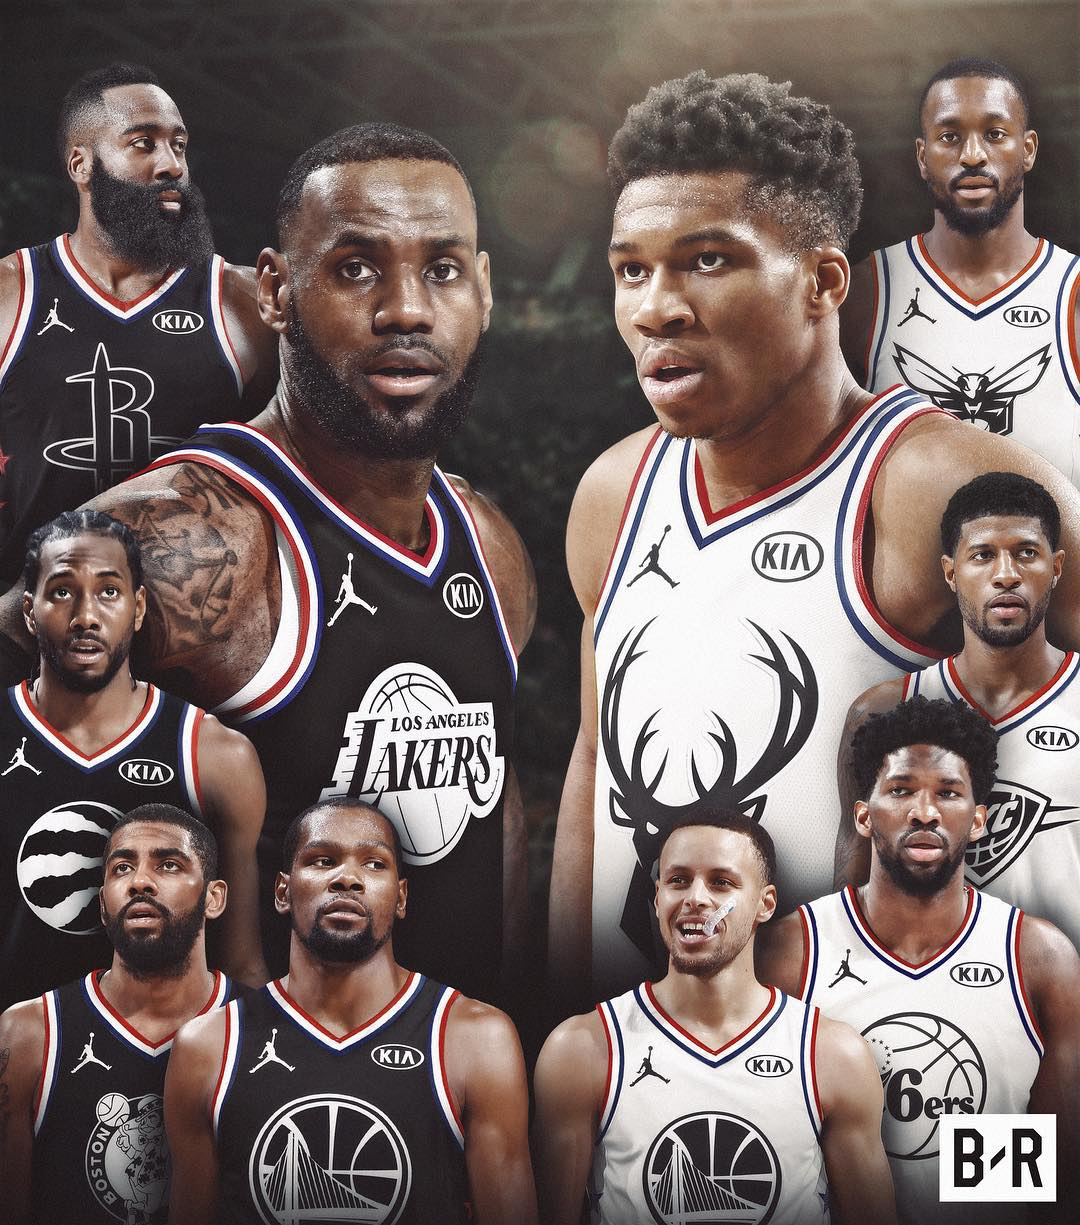 NBA 2019 全明星赛 Team LeBron 及 Team Giannis 队长选人过程完整公开